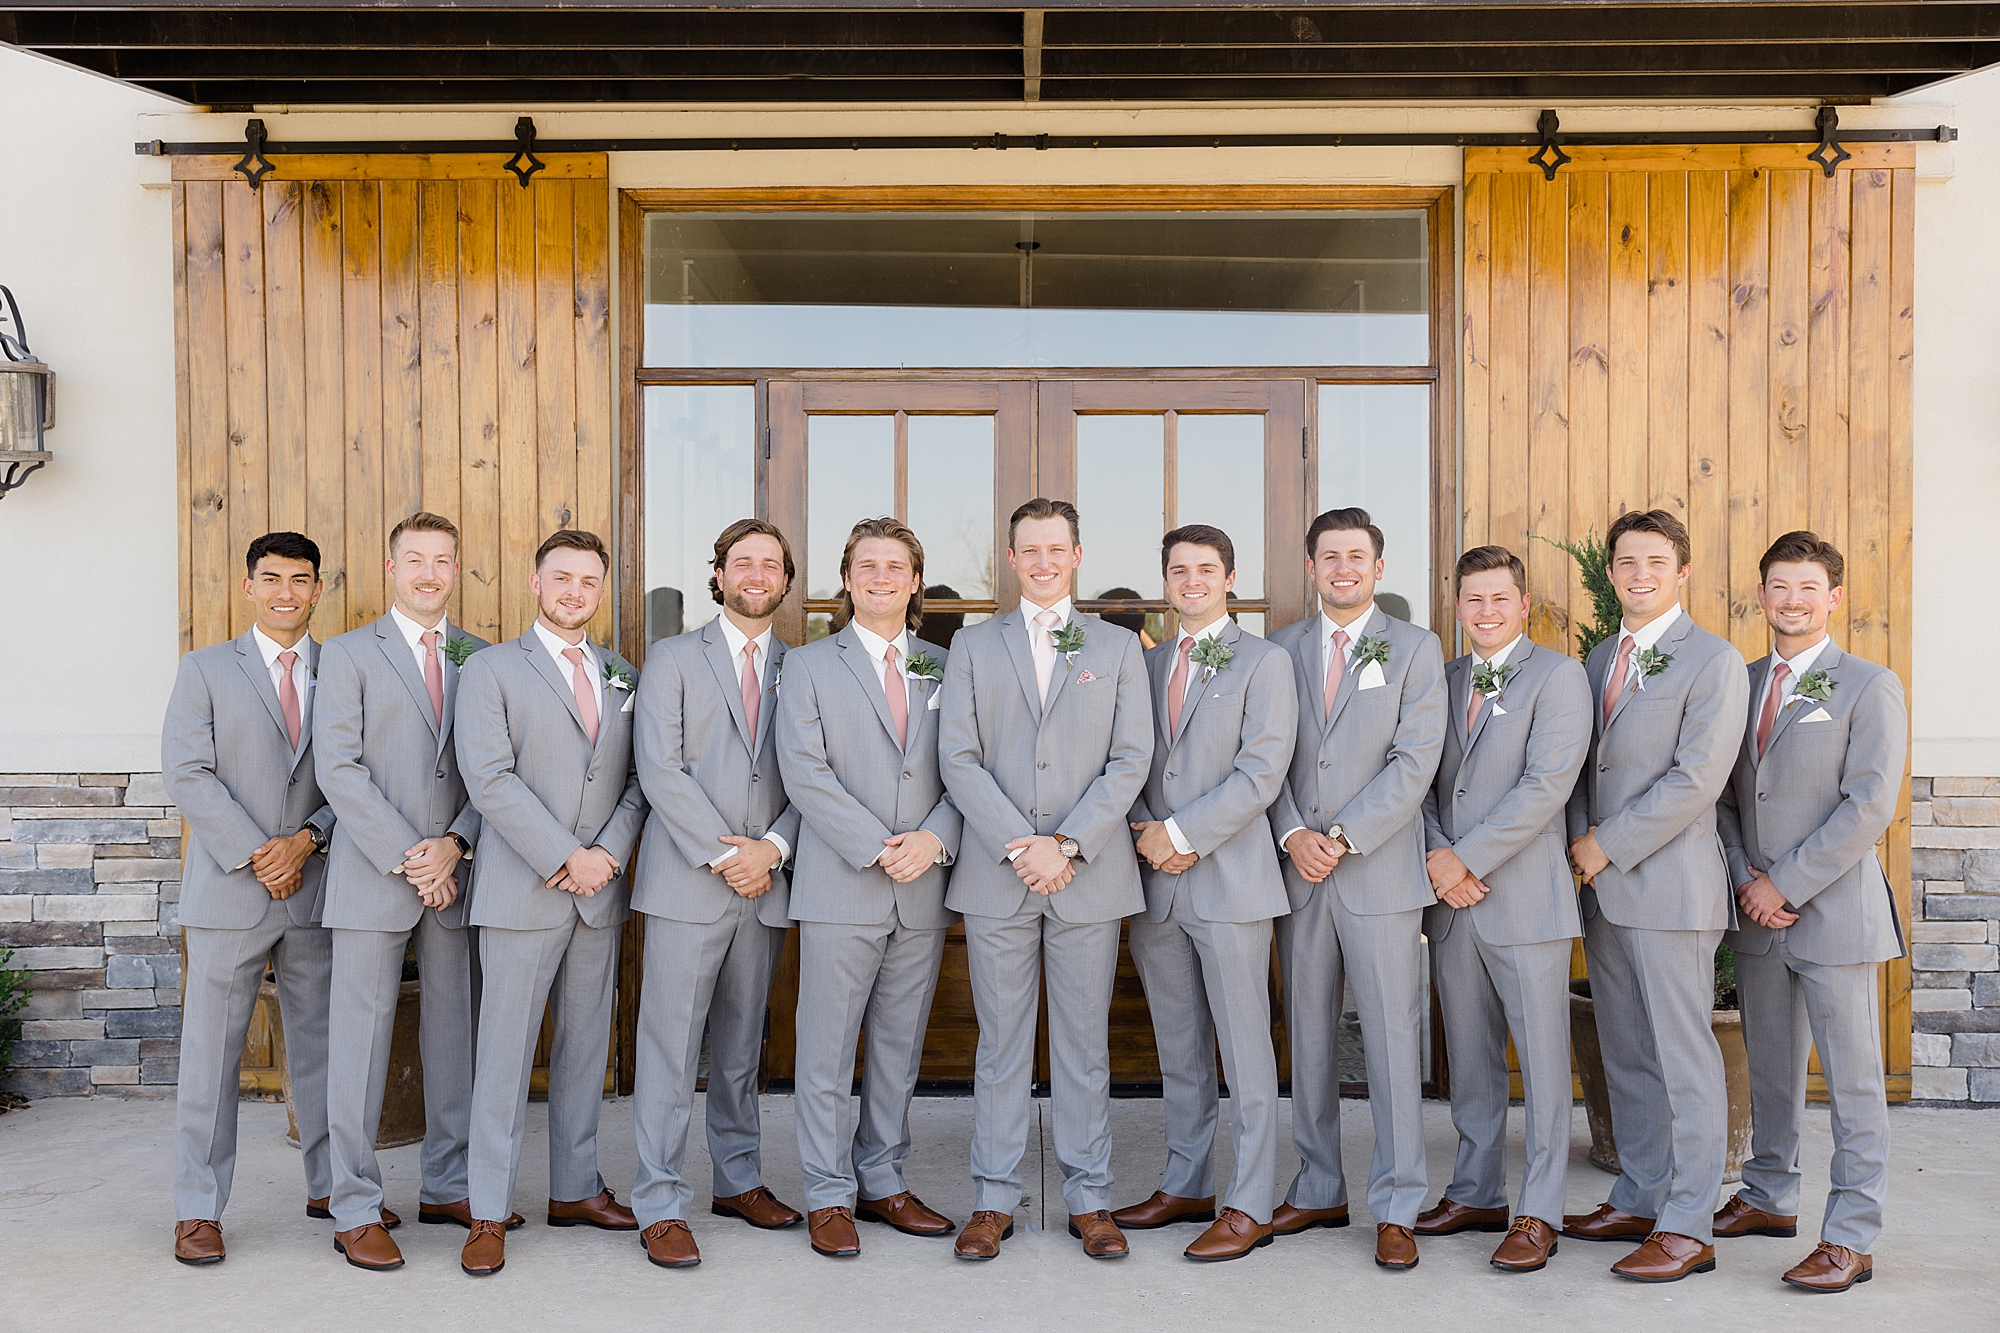 groom and groomsmen in grey suits pose by wooden doors